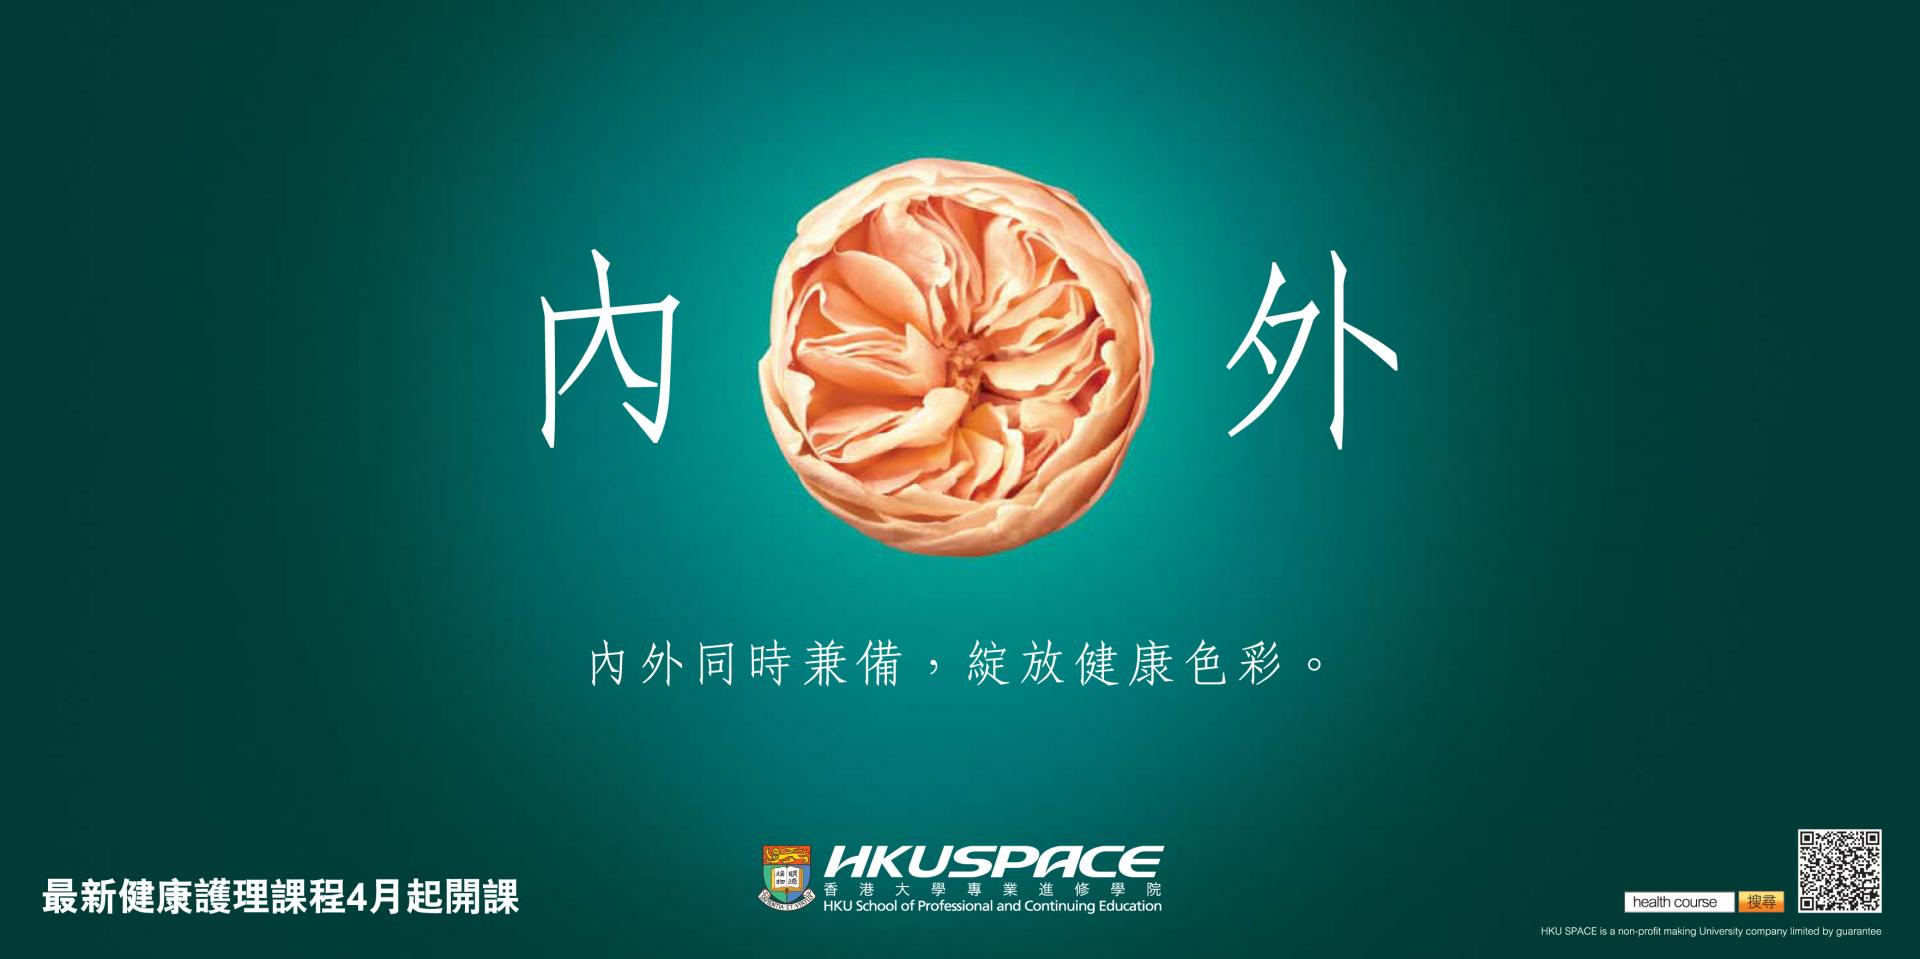 HKU space advertisement